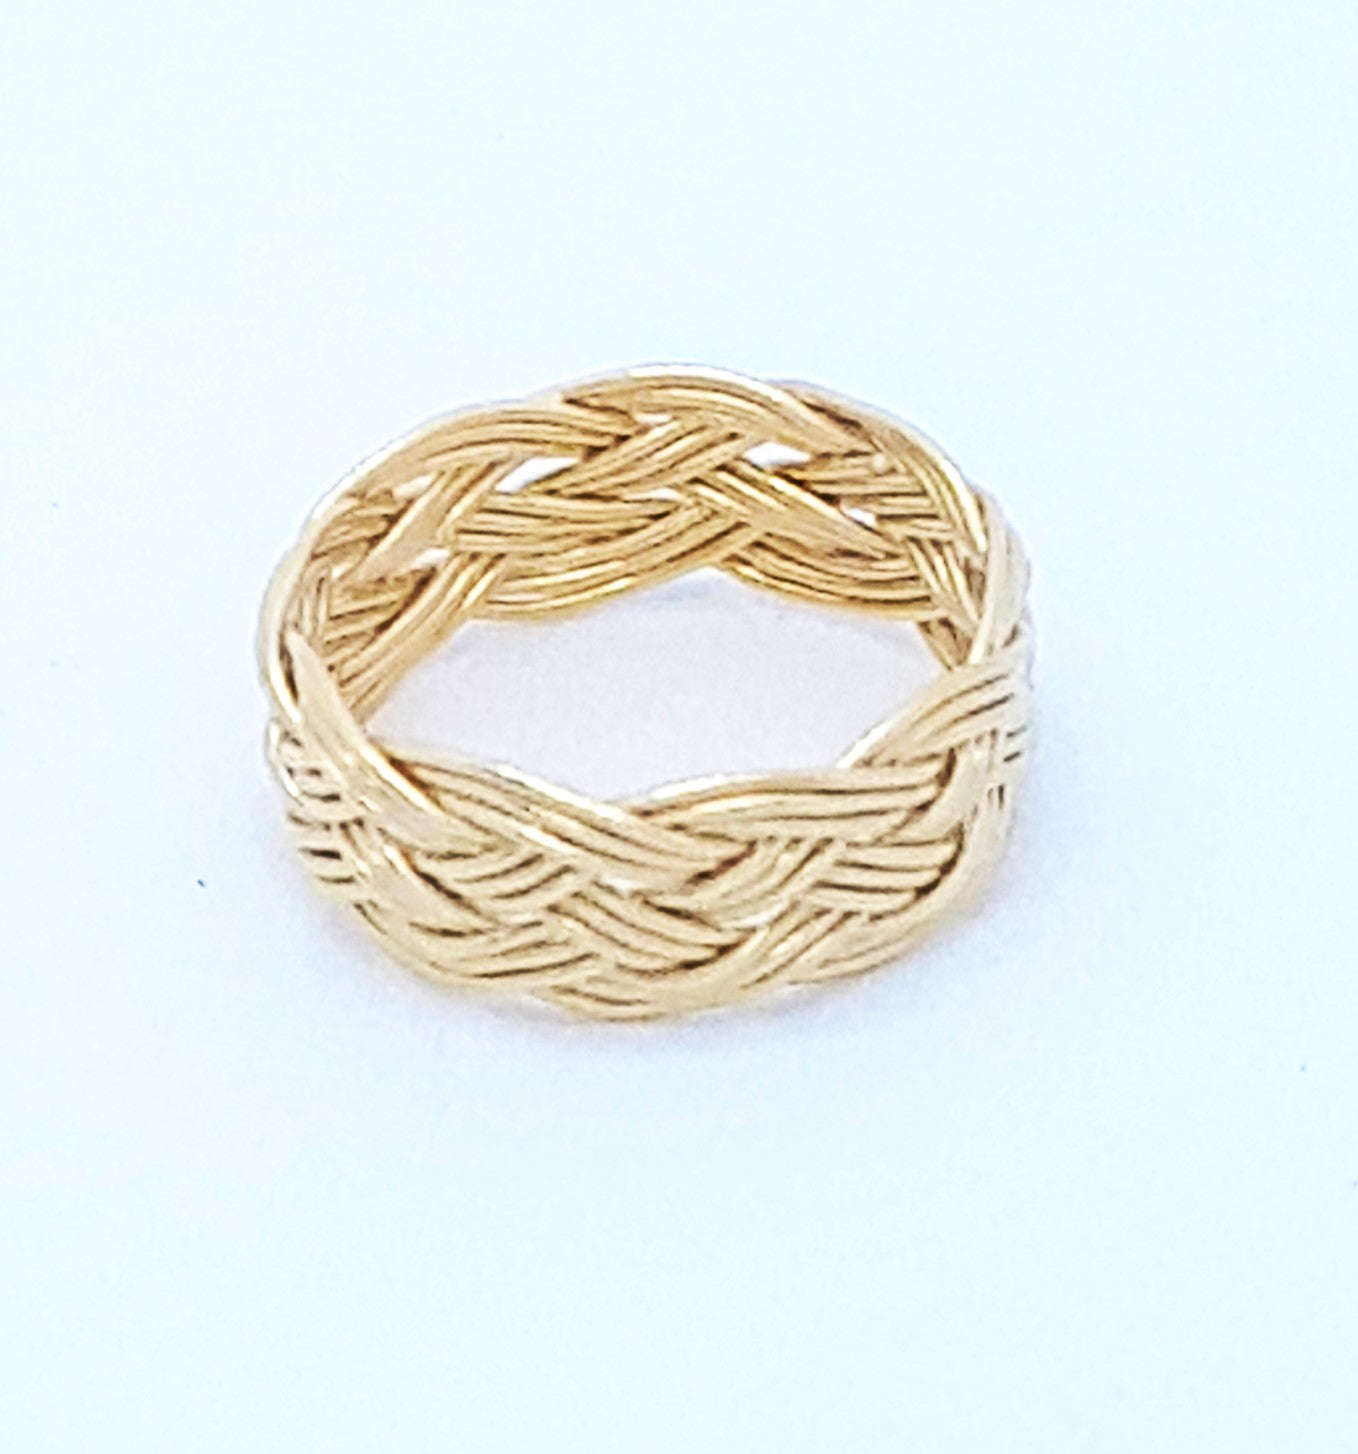 Turks Head Knot Ring, Gold - 3 strand, lightweight